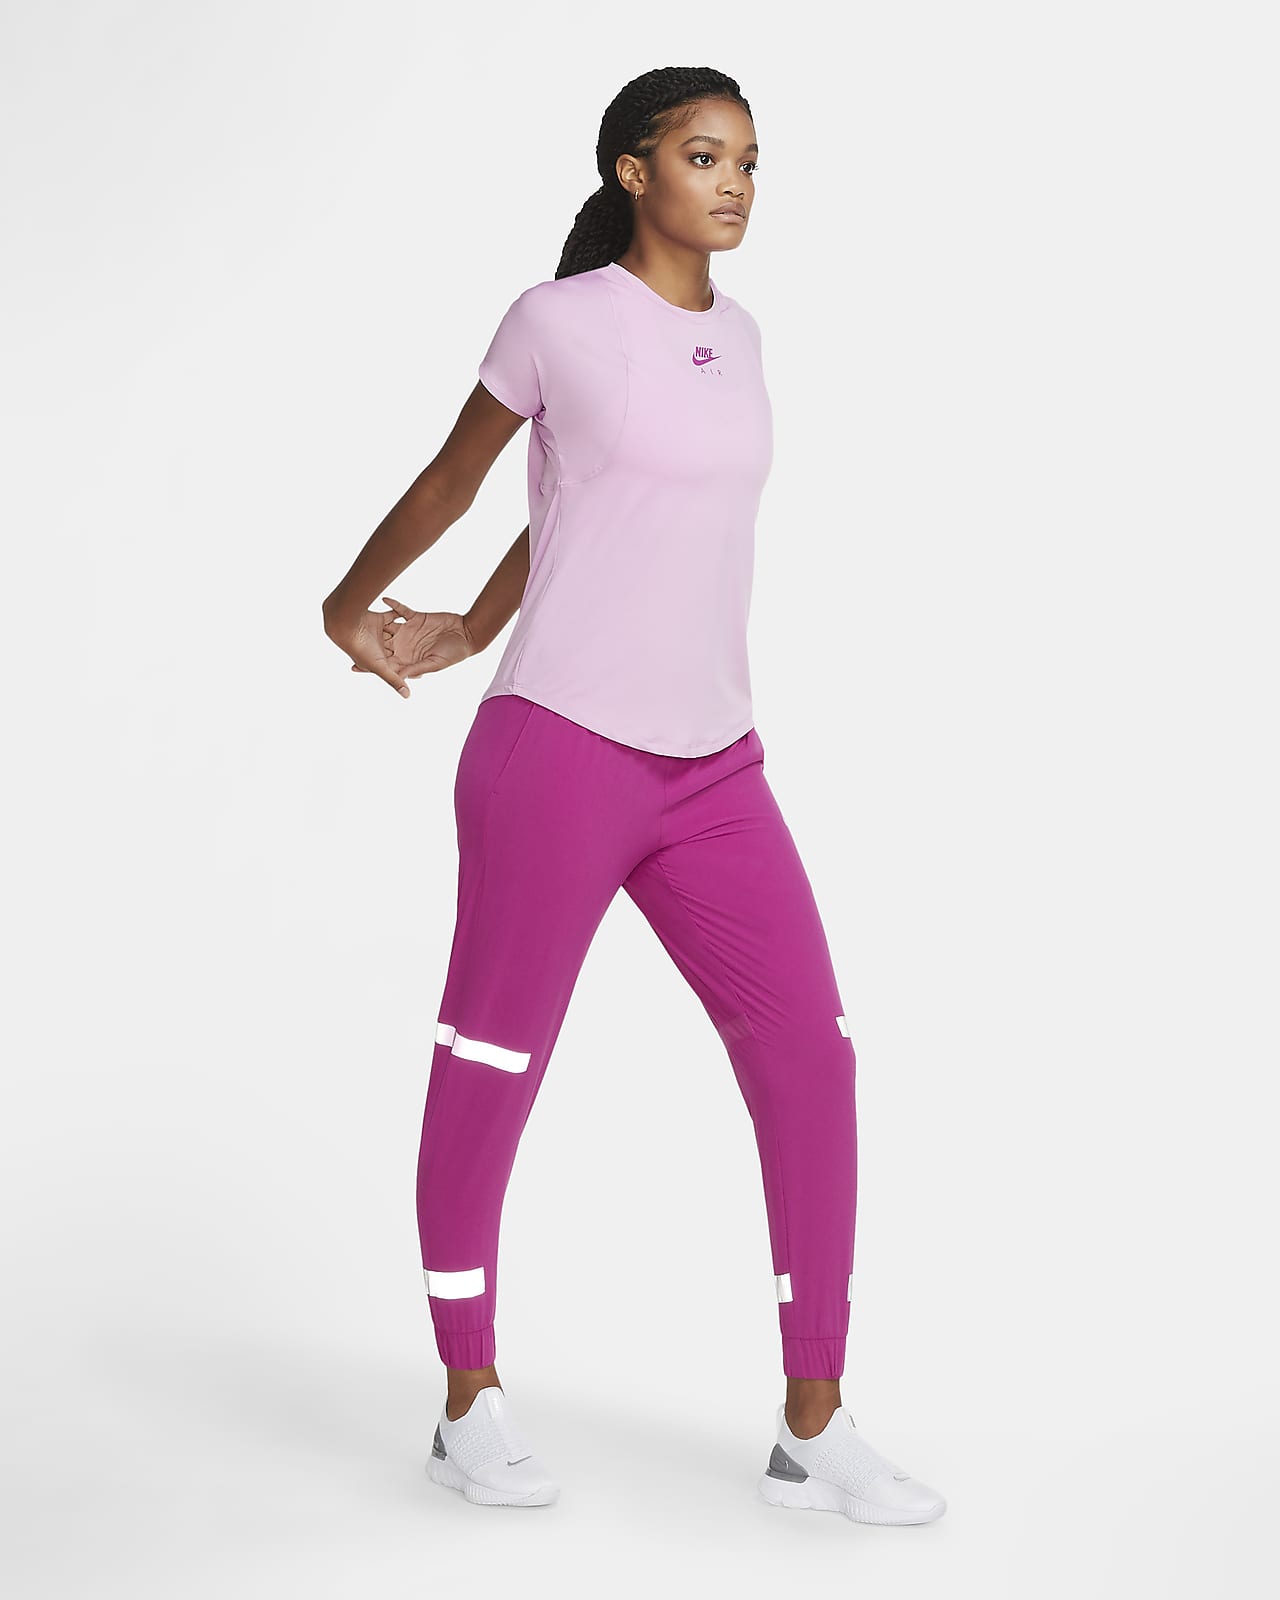 Nike Air Women's Short-Sleeve Running Top. Nike LU